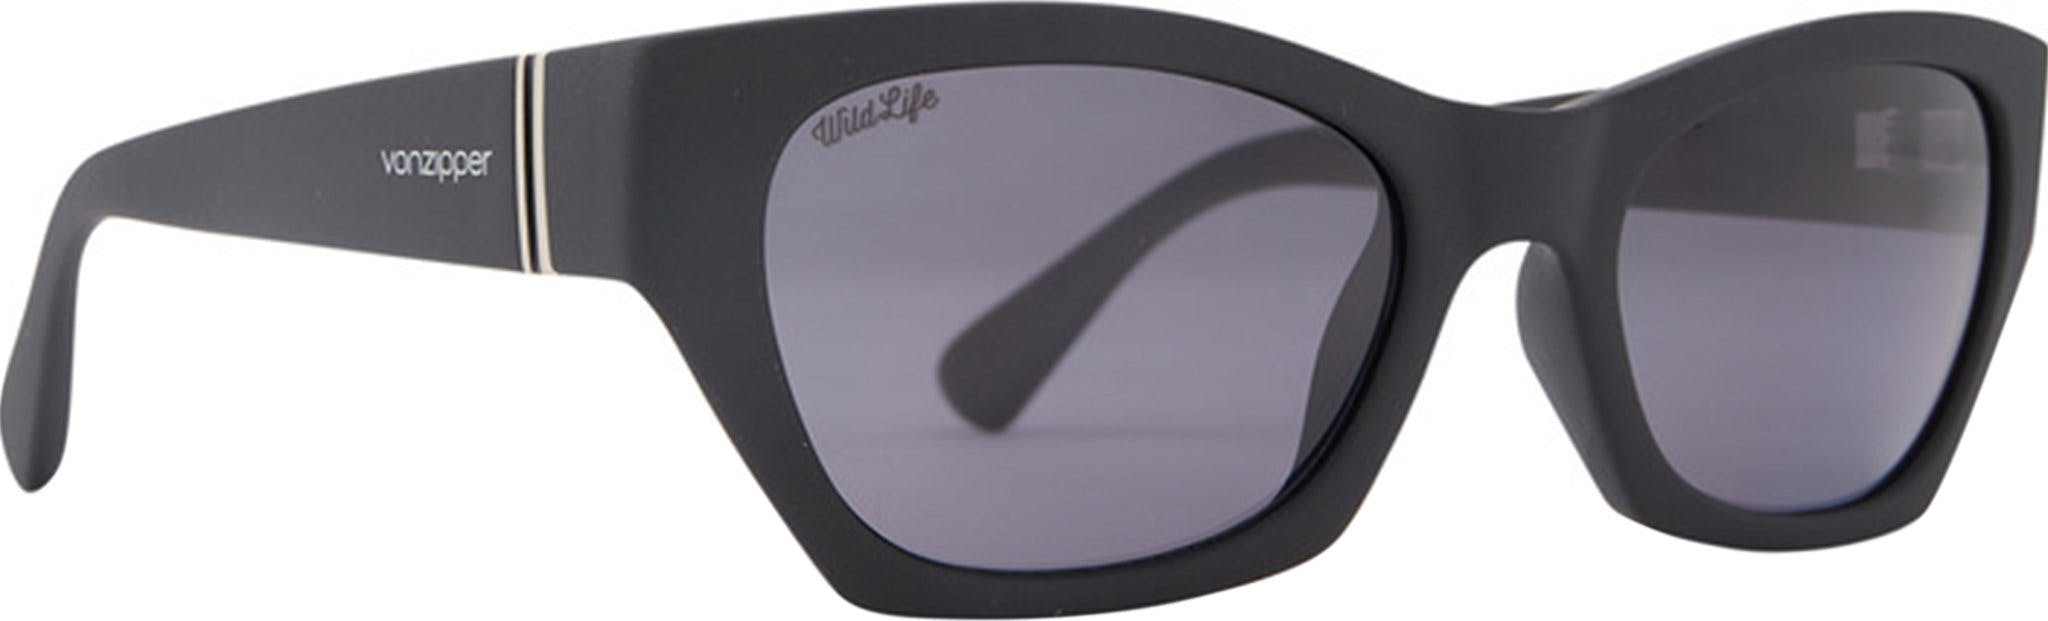 Product image for Stray Polarized Sunglasses - Men's